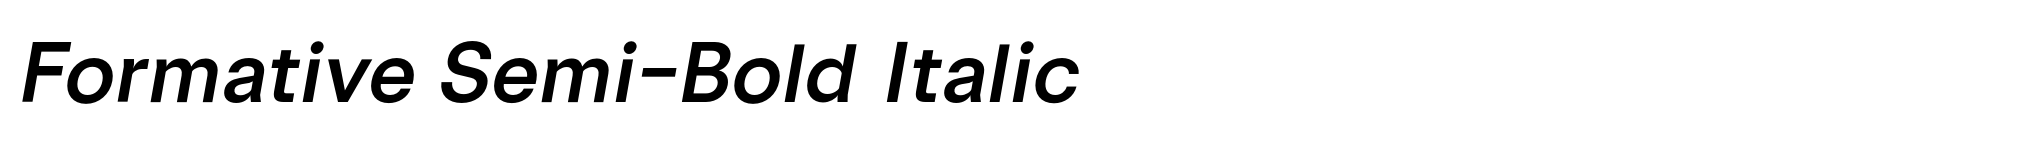 Formative Semi-Bold Italic image